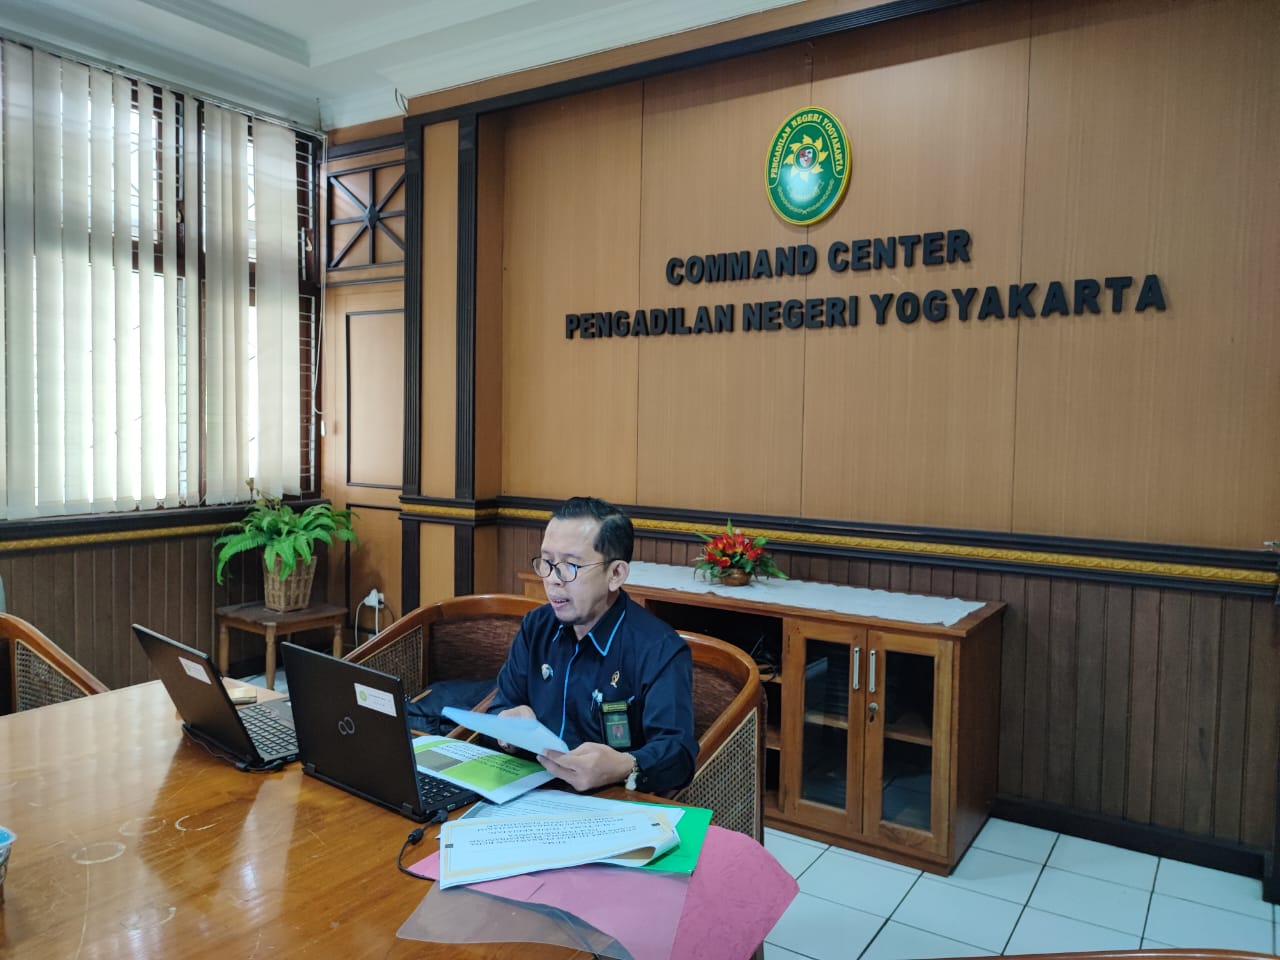 Pengadilan Negeri Yogyakarta Mengikuti Webinar Nasional Bersama Fakultas Hukum Universitas Islam Indonesia